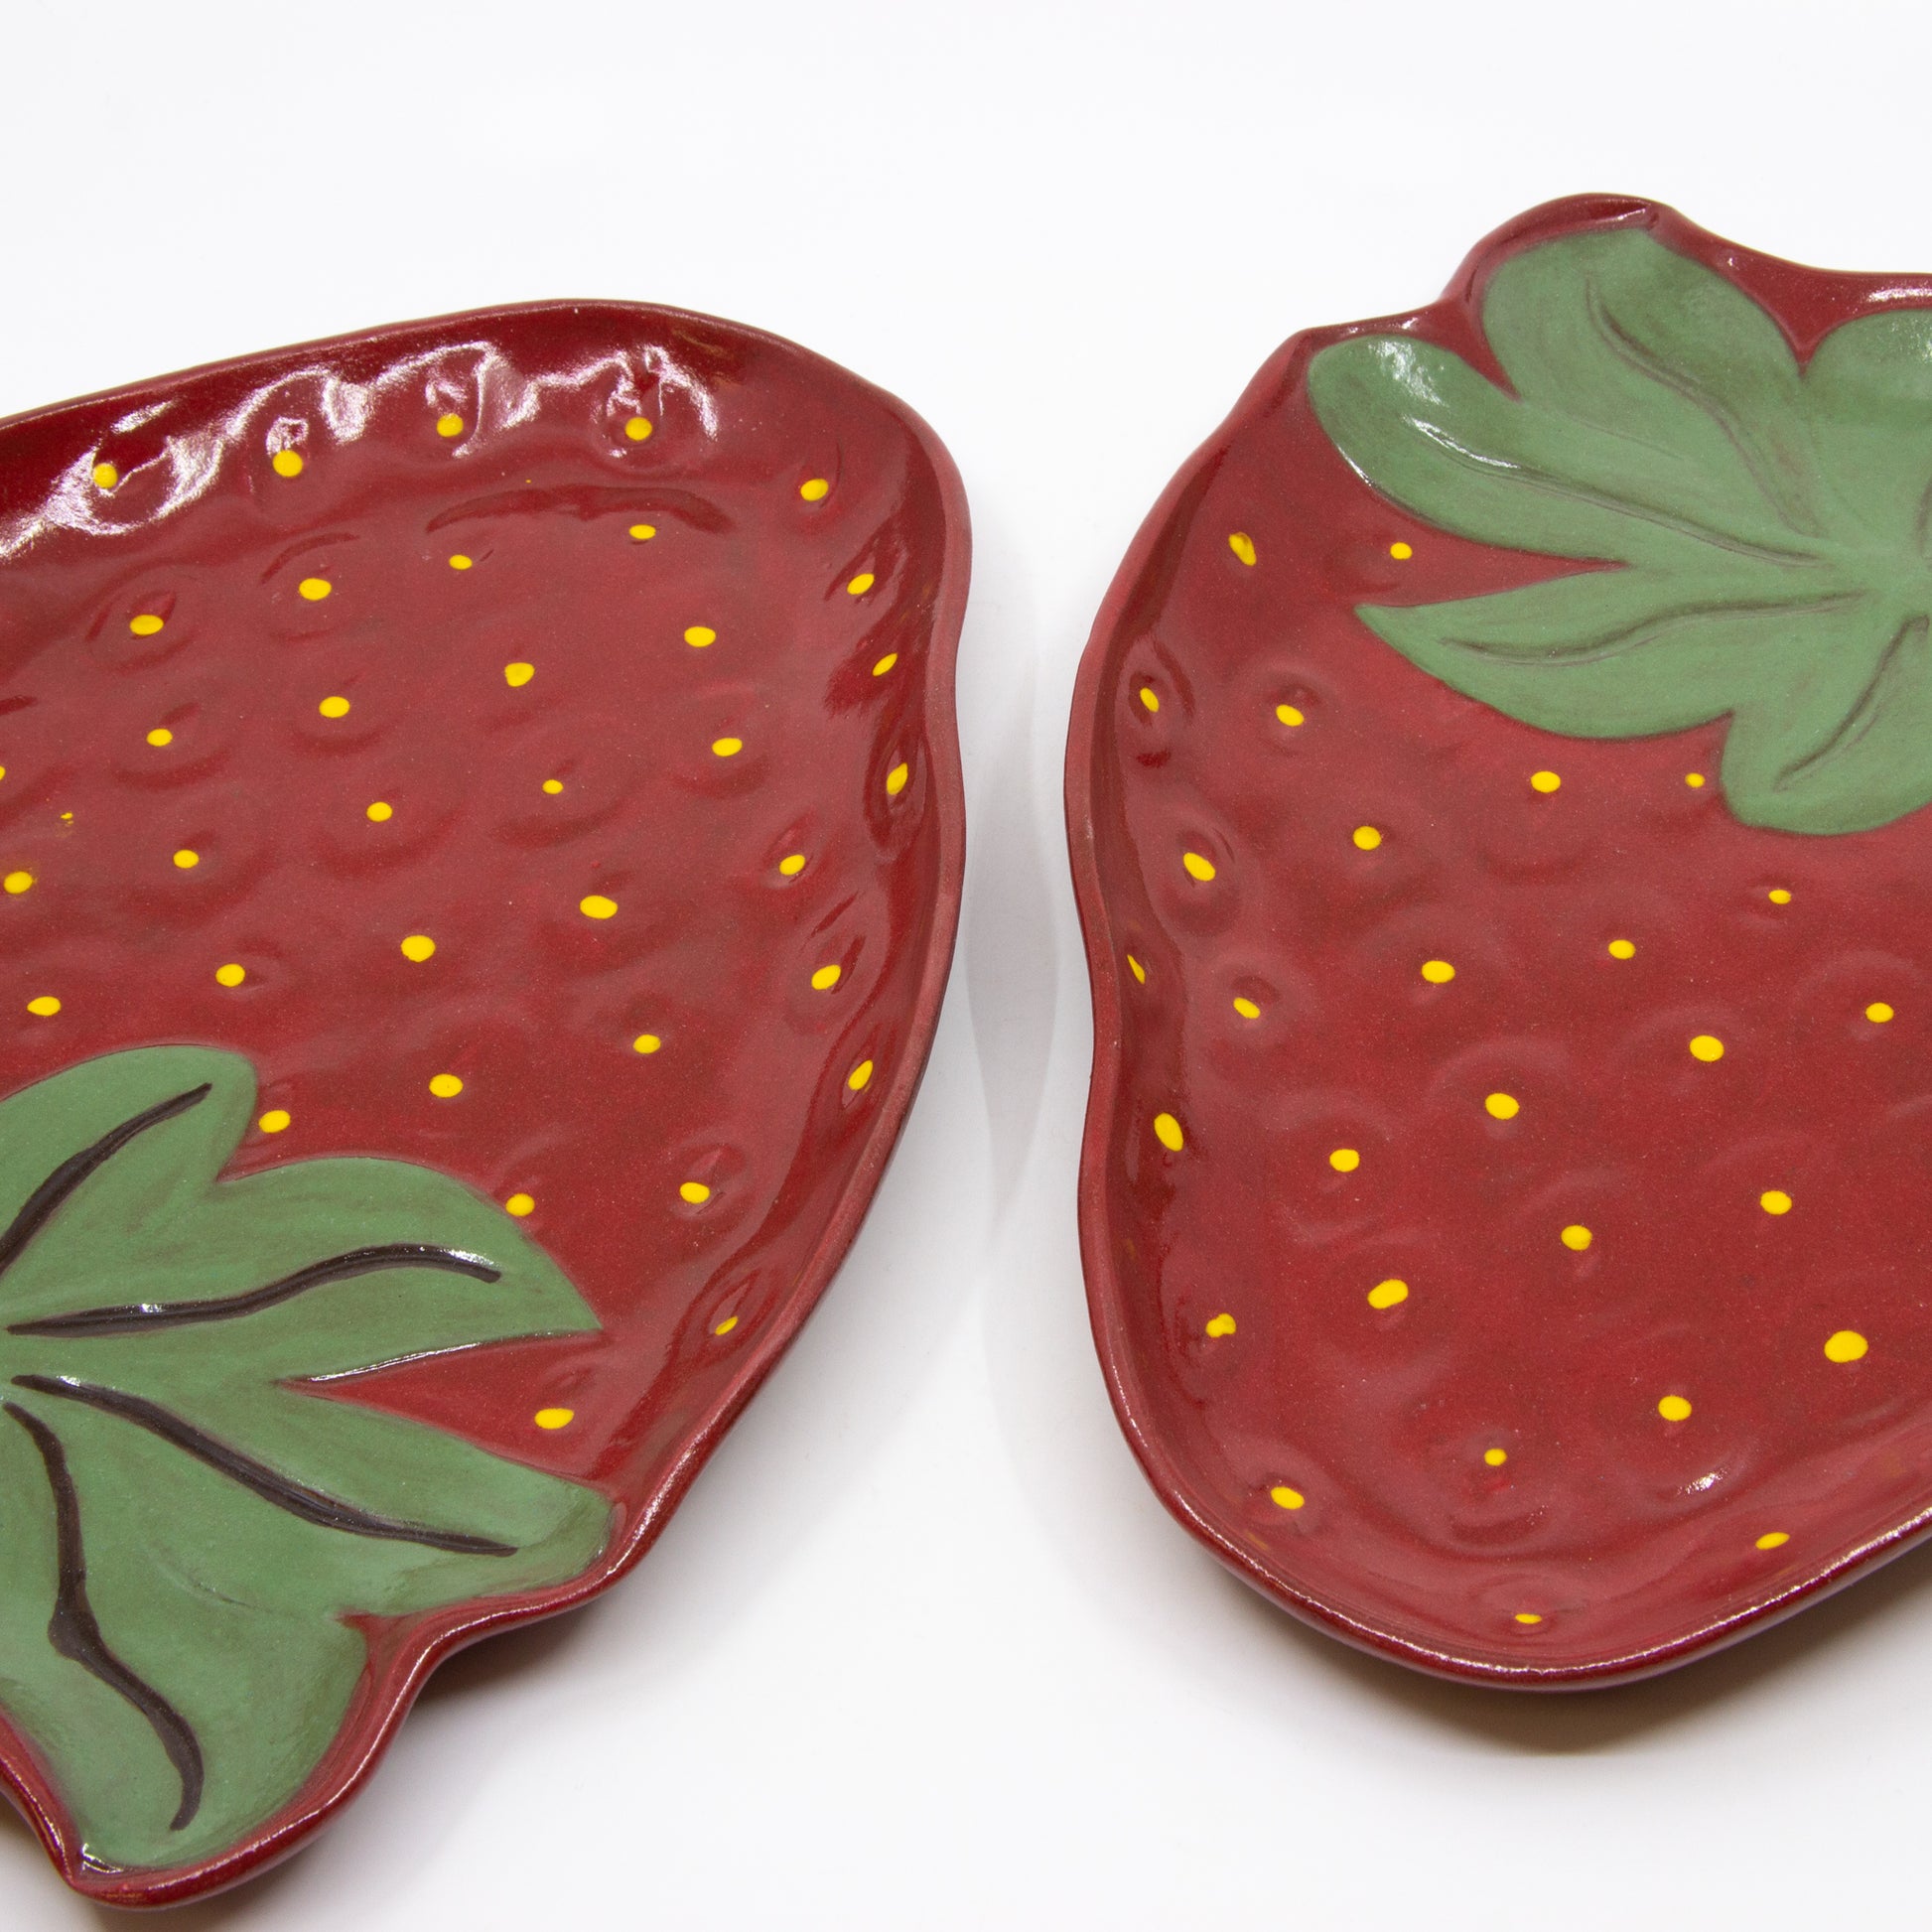 Strawberry plates